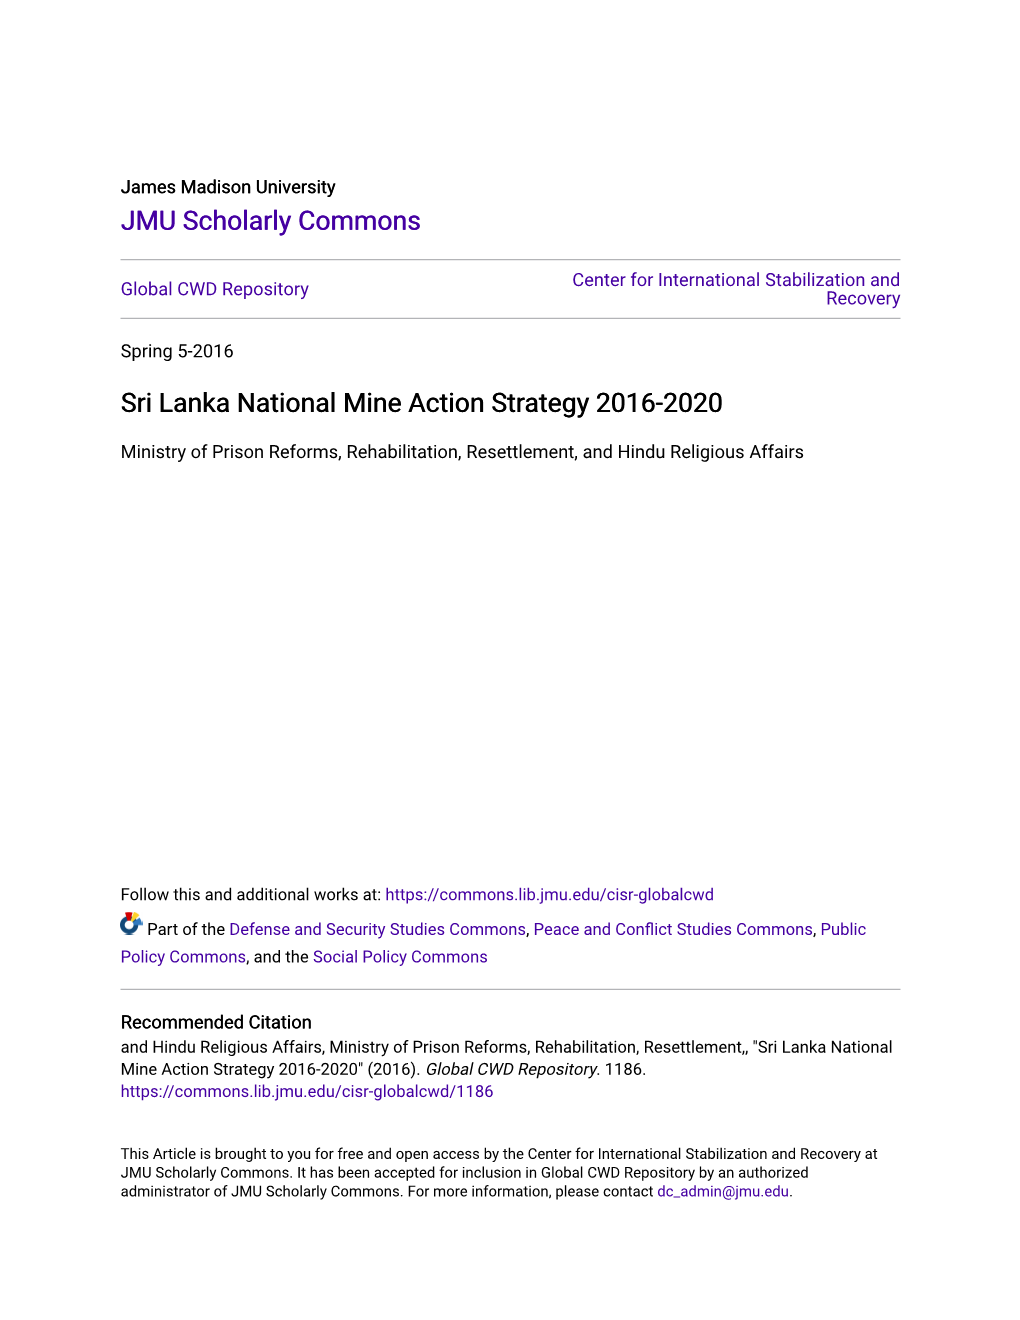 Sri Lanka National Mine Action Strategy 2016-2020